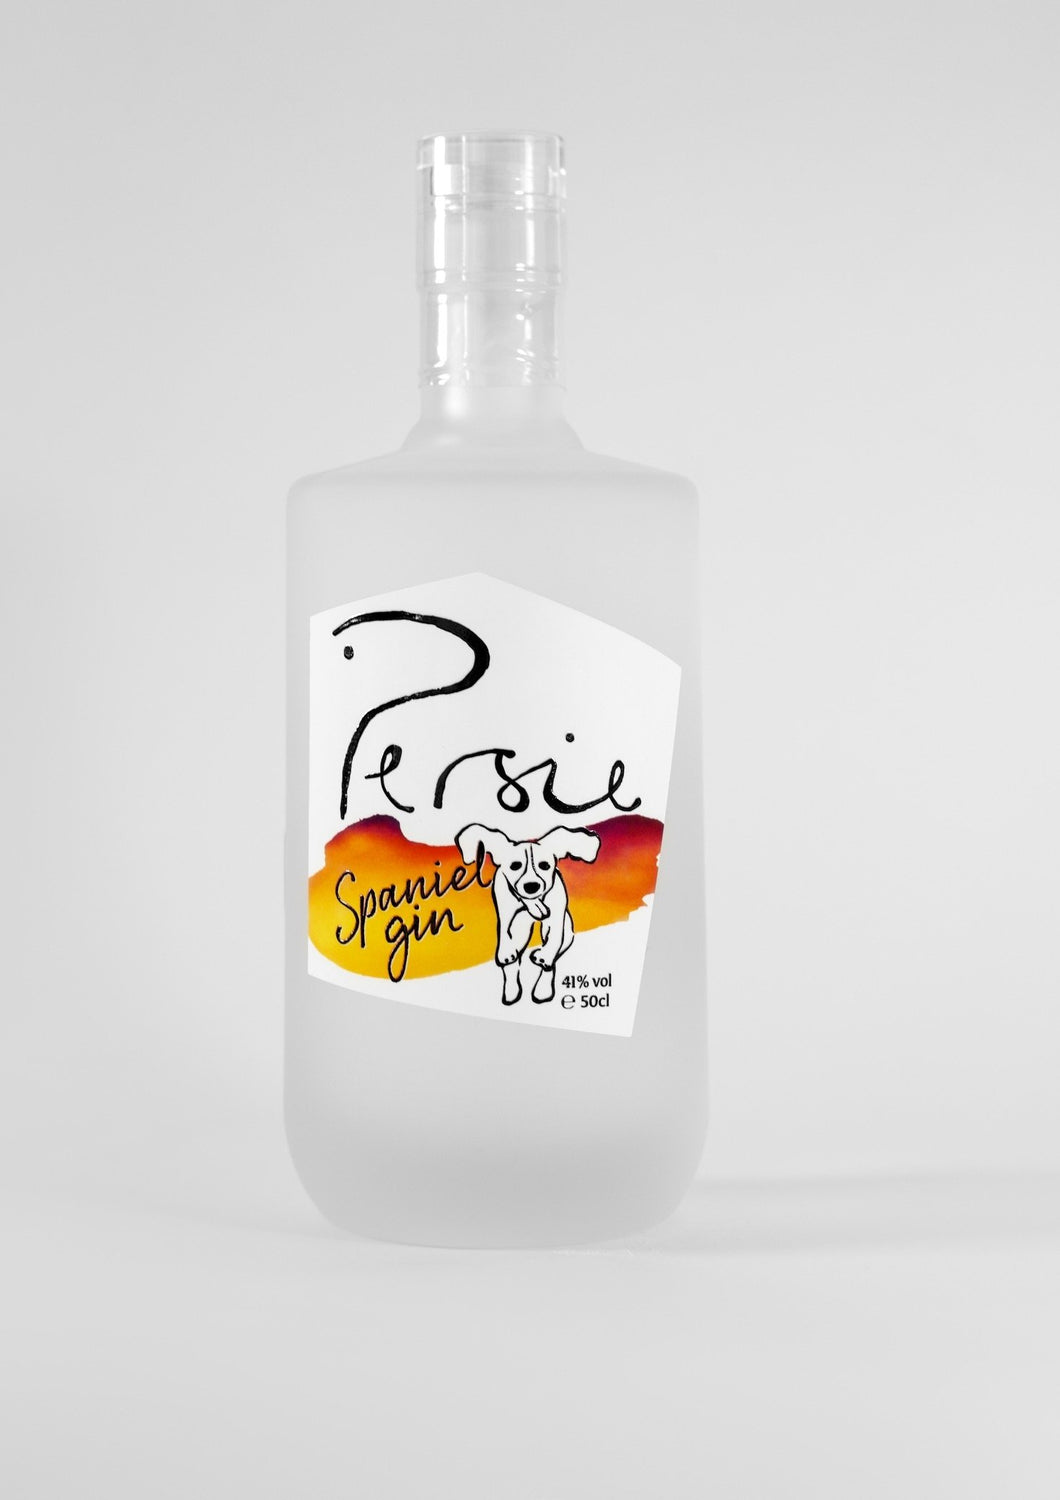 Persie - Spaniel Gin